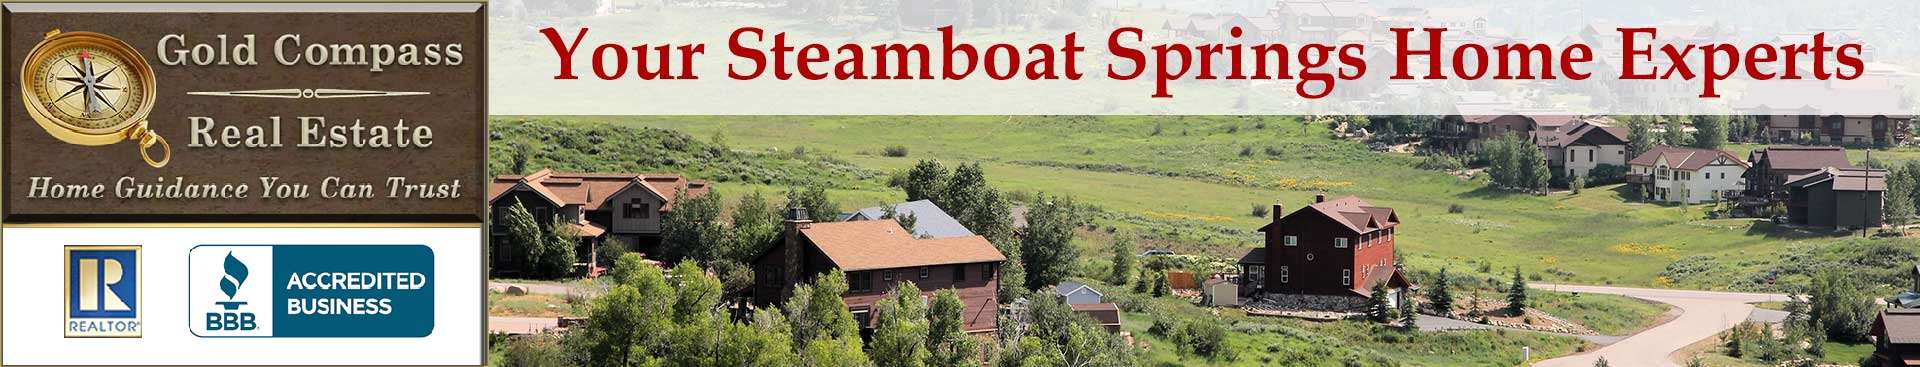 Steamboat-Springs-Banner